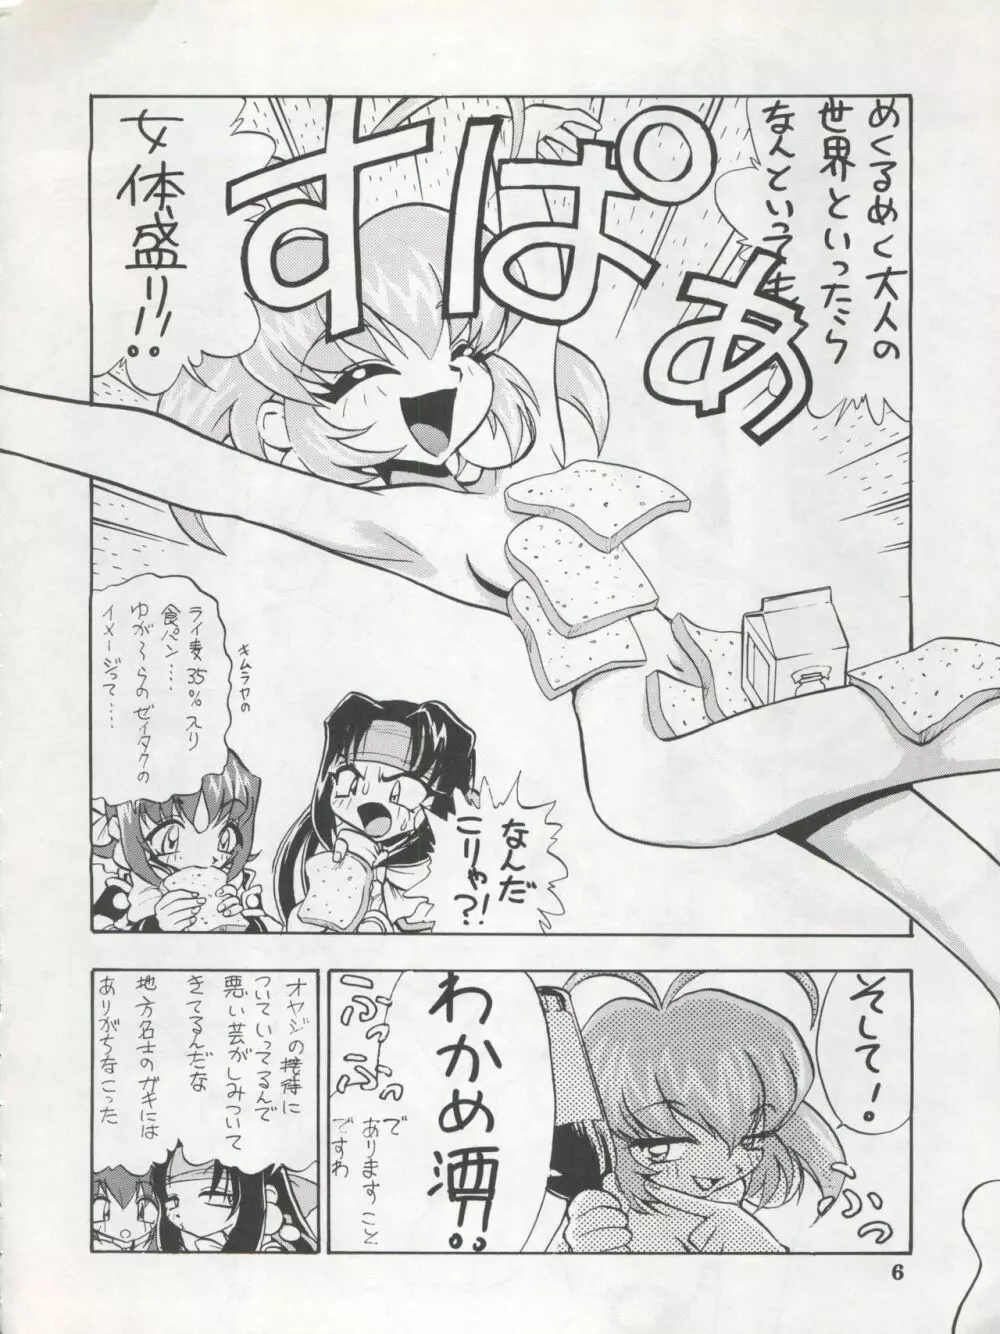 1998 SUMMER 電撃犬王 - page8